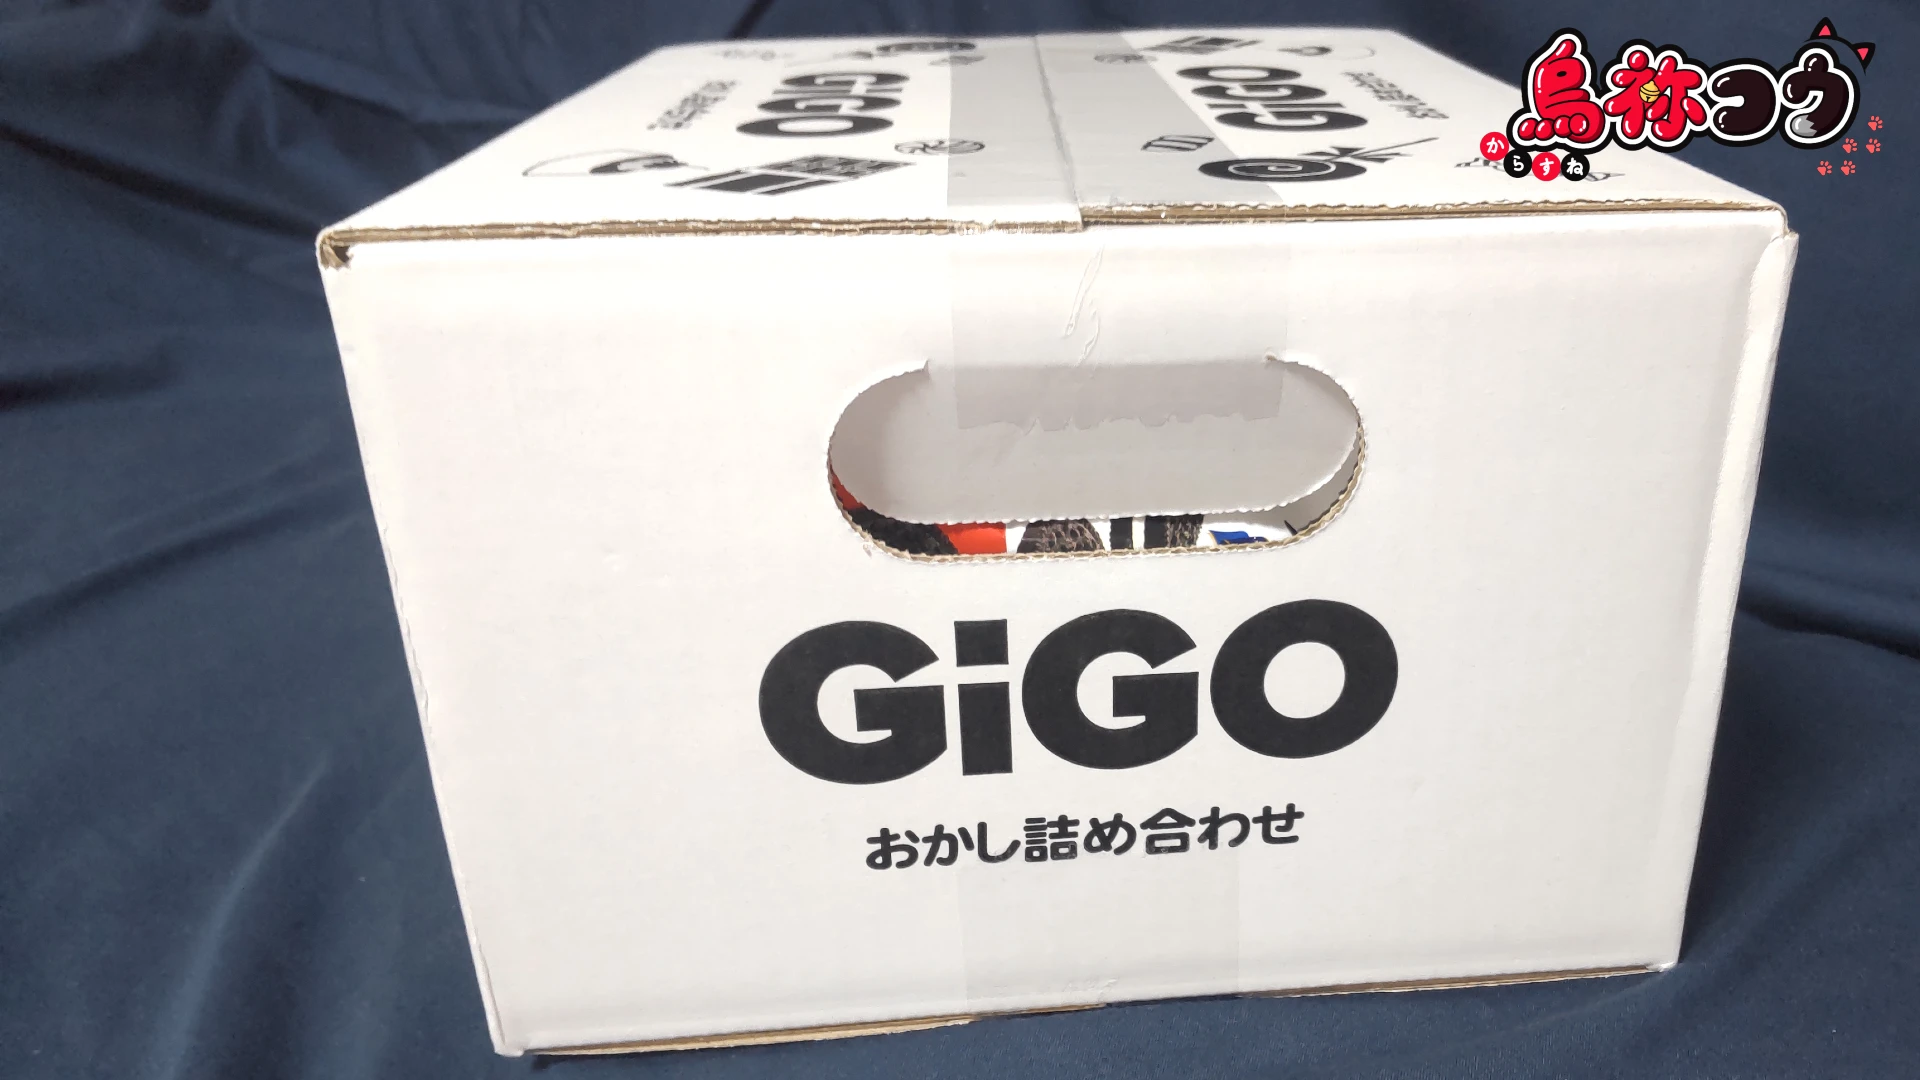 GiGO 限定おかし詰め合わせ BOX の横側です